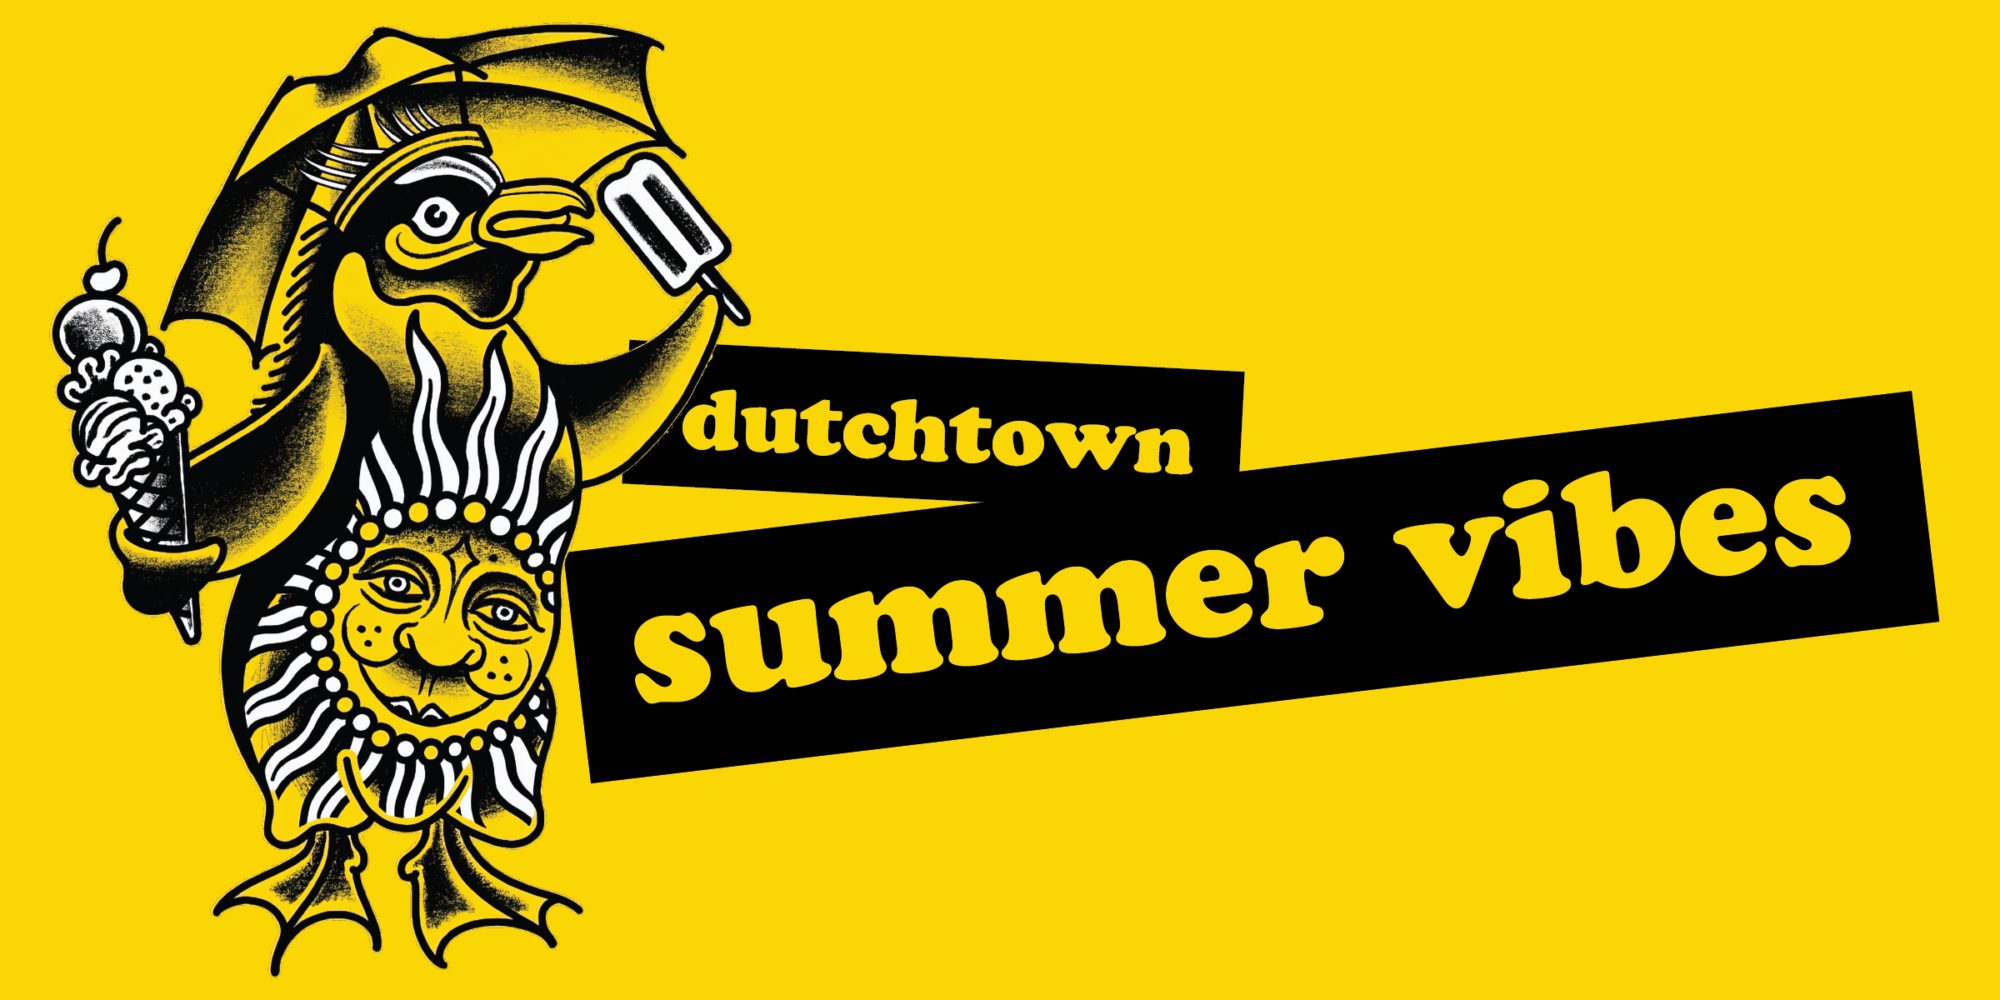 Dutchtown Summer Vibes